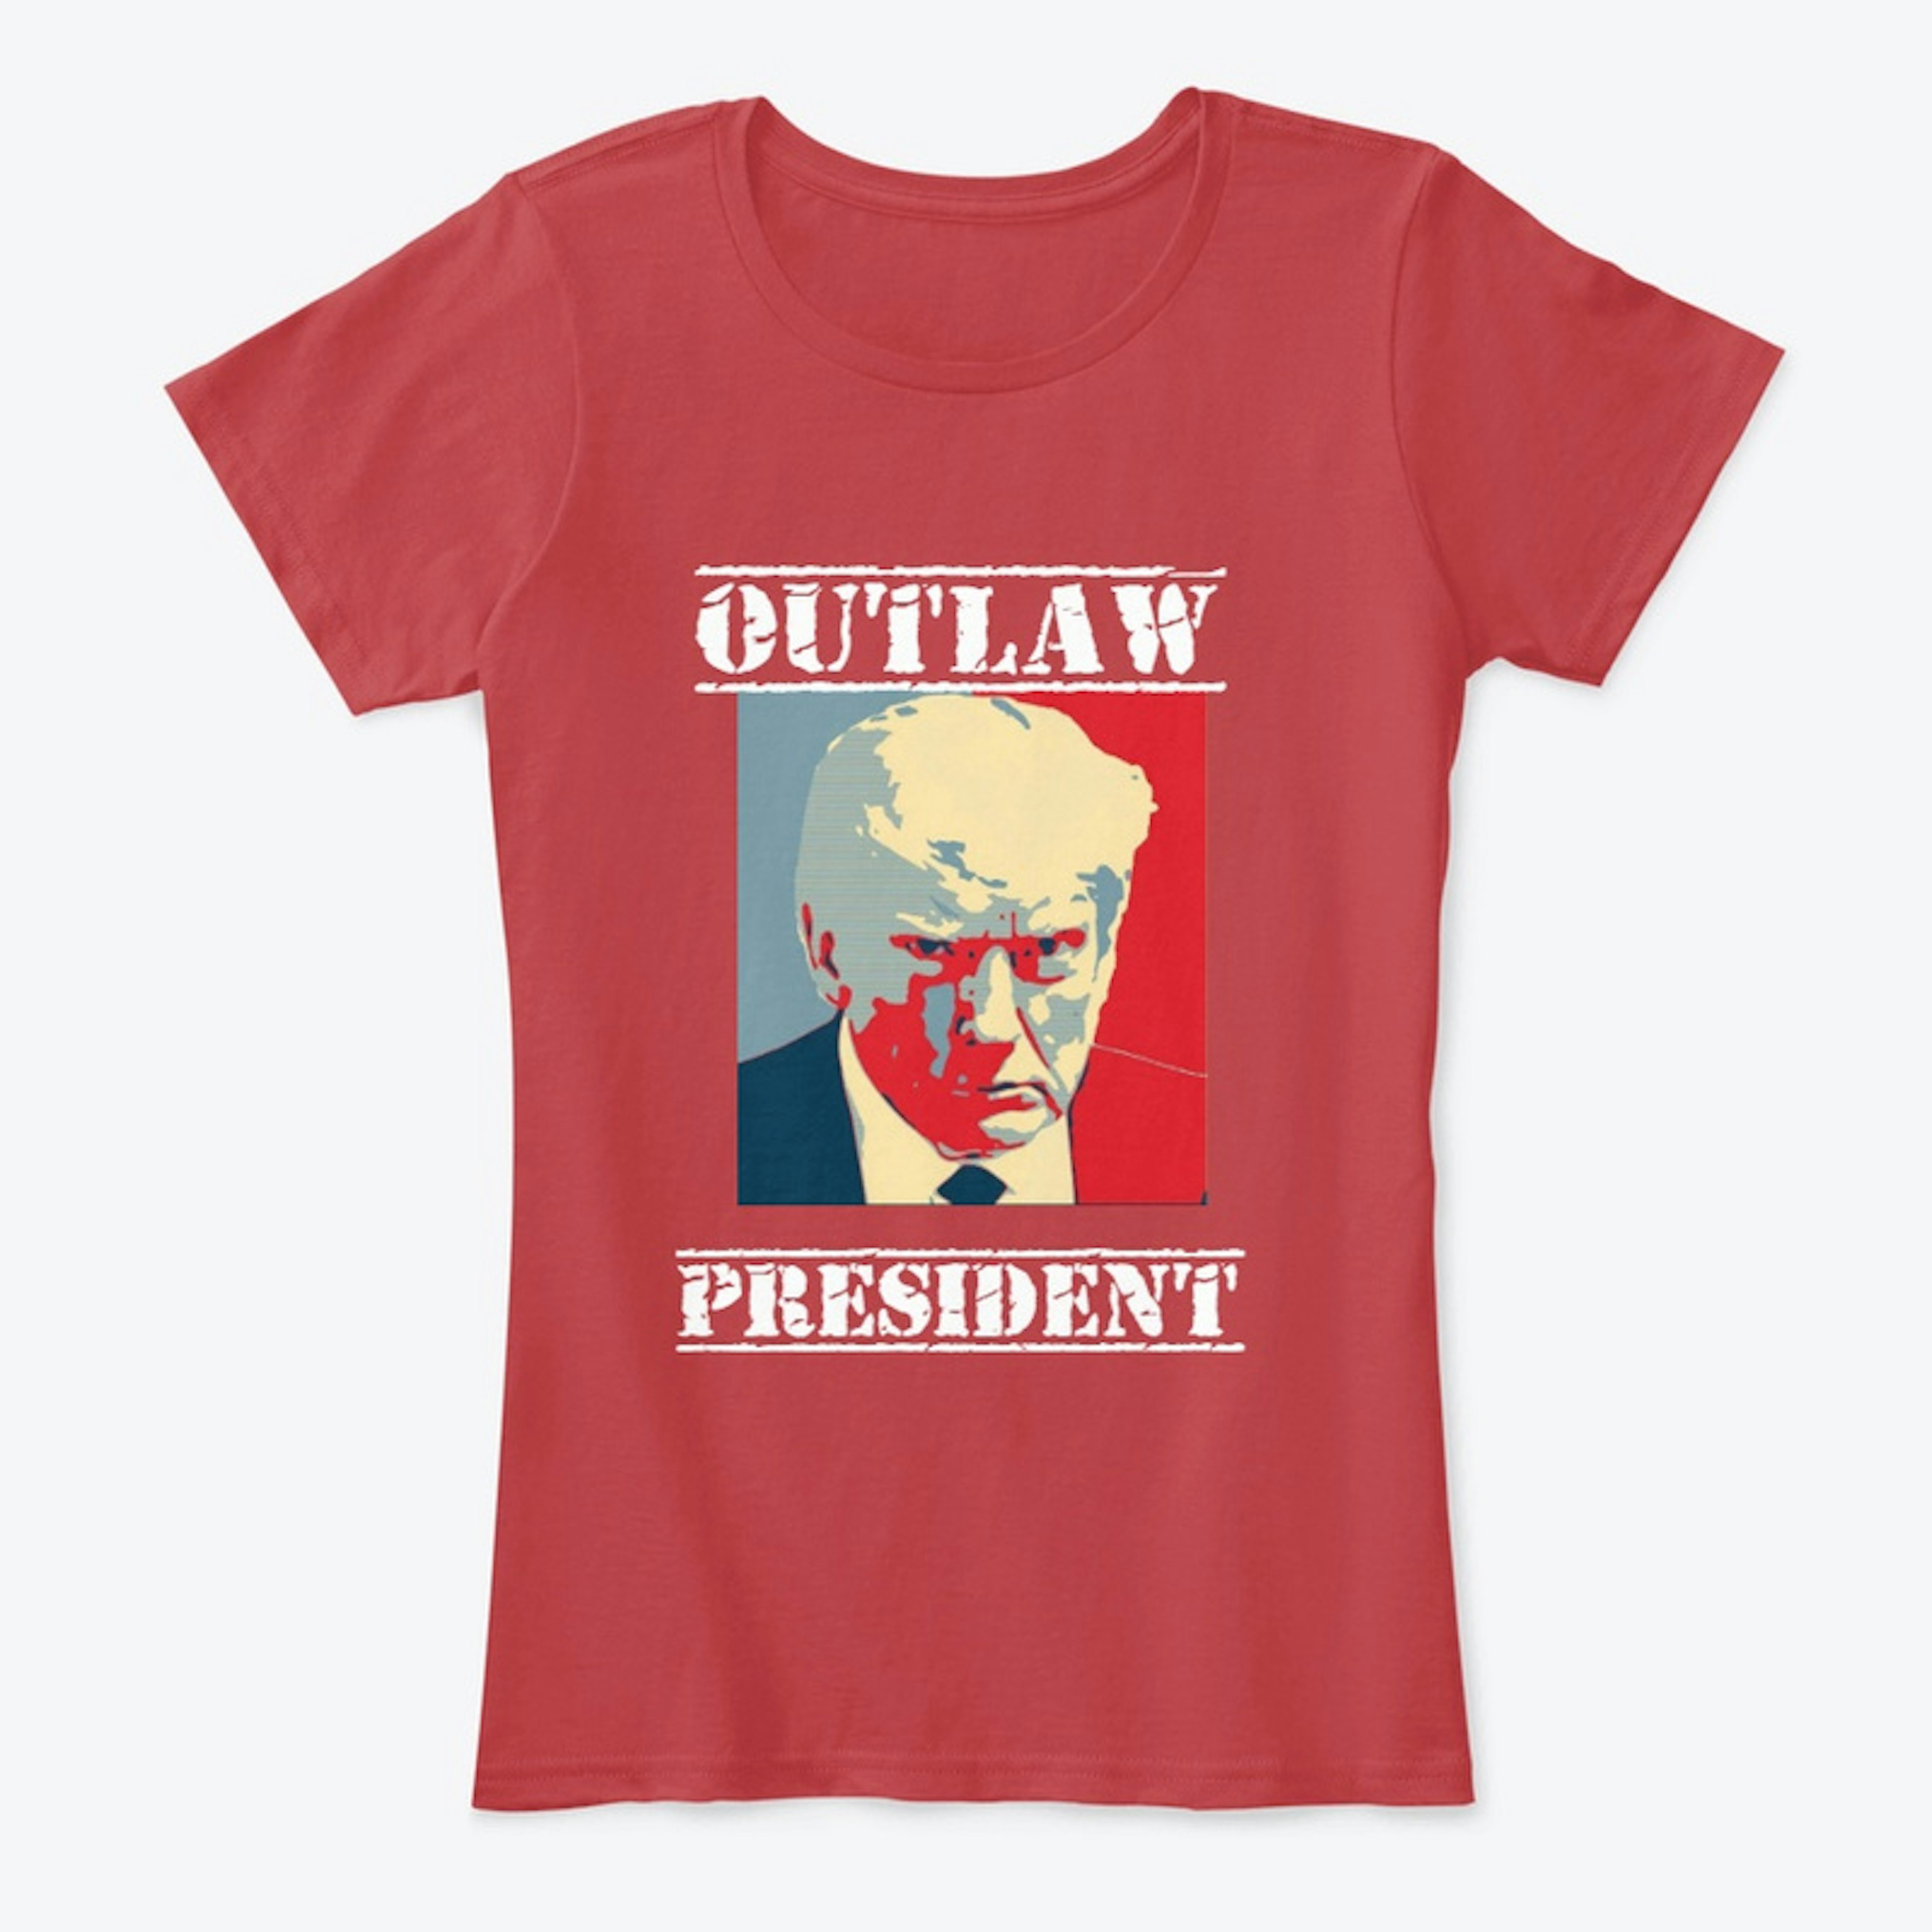 Outlaw President